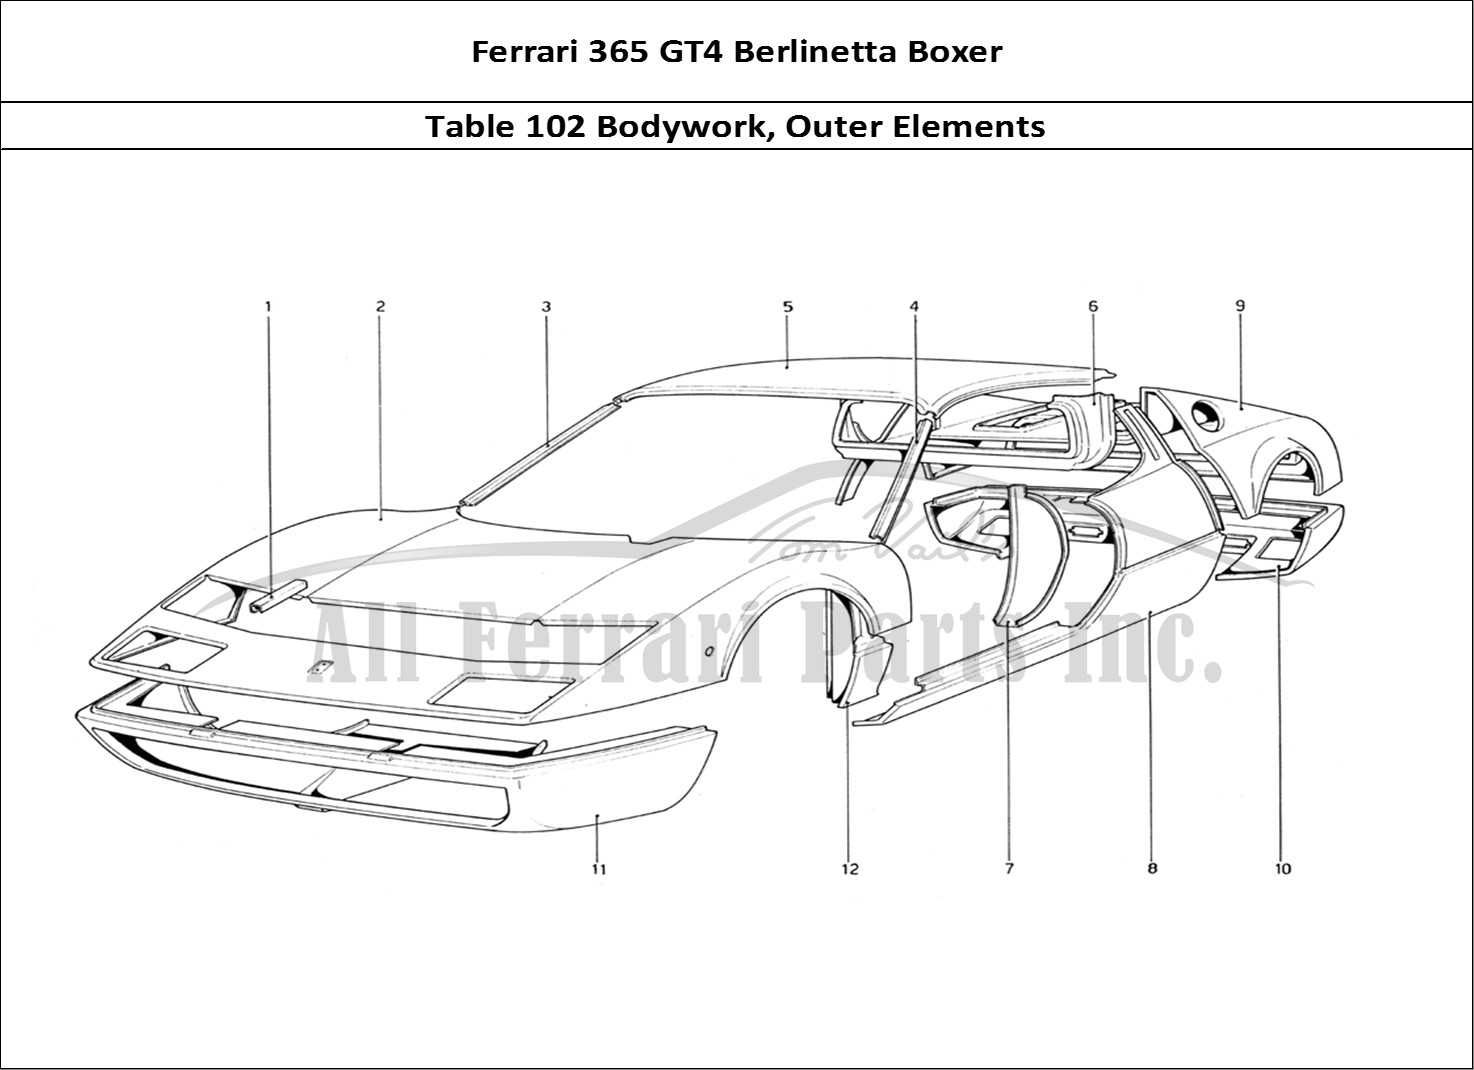 Ferrari Parts Ferrari 365 GT4 Berlinetta Boxer Page 102 Body Shell - Outer Elemen